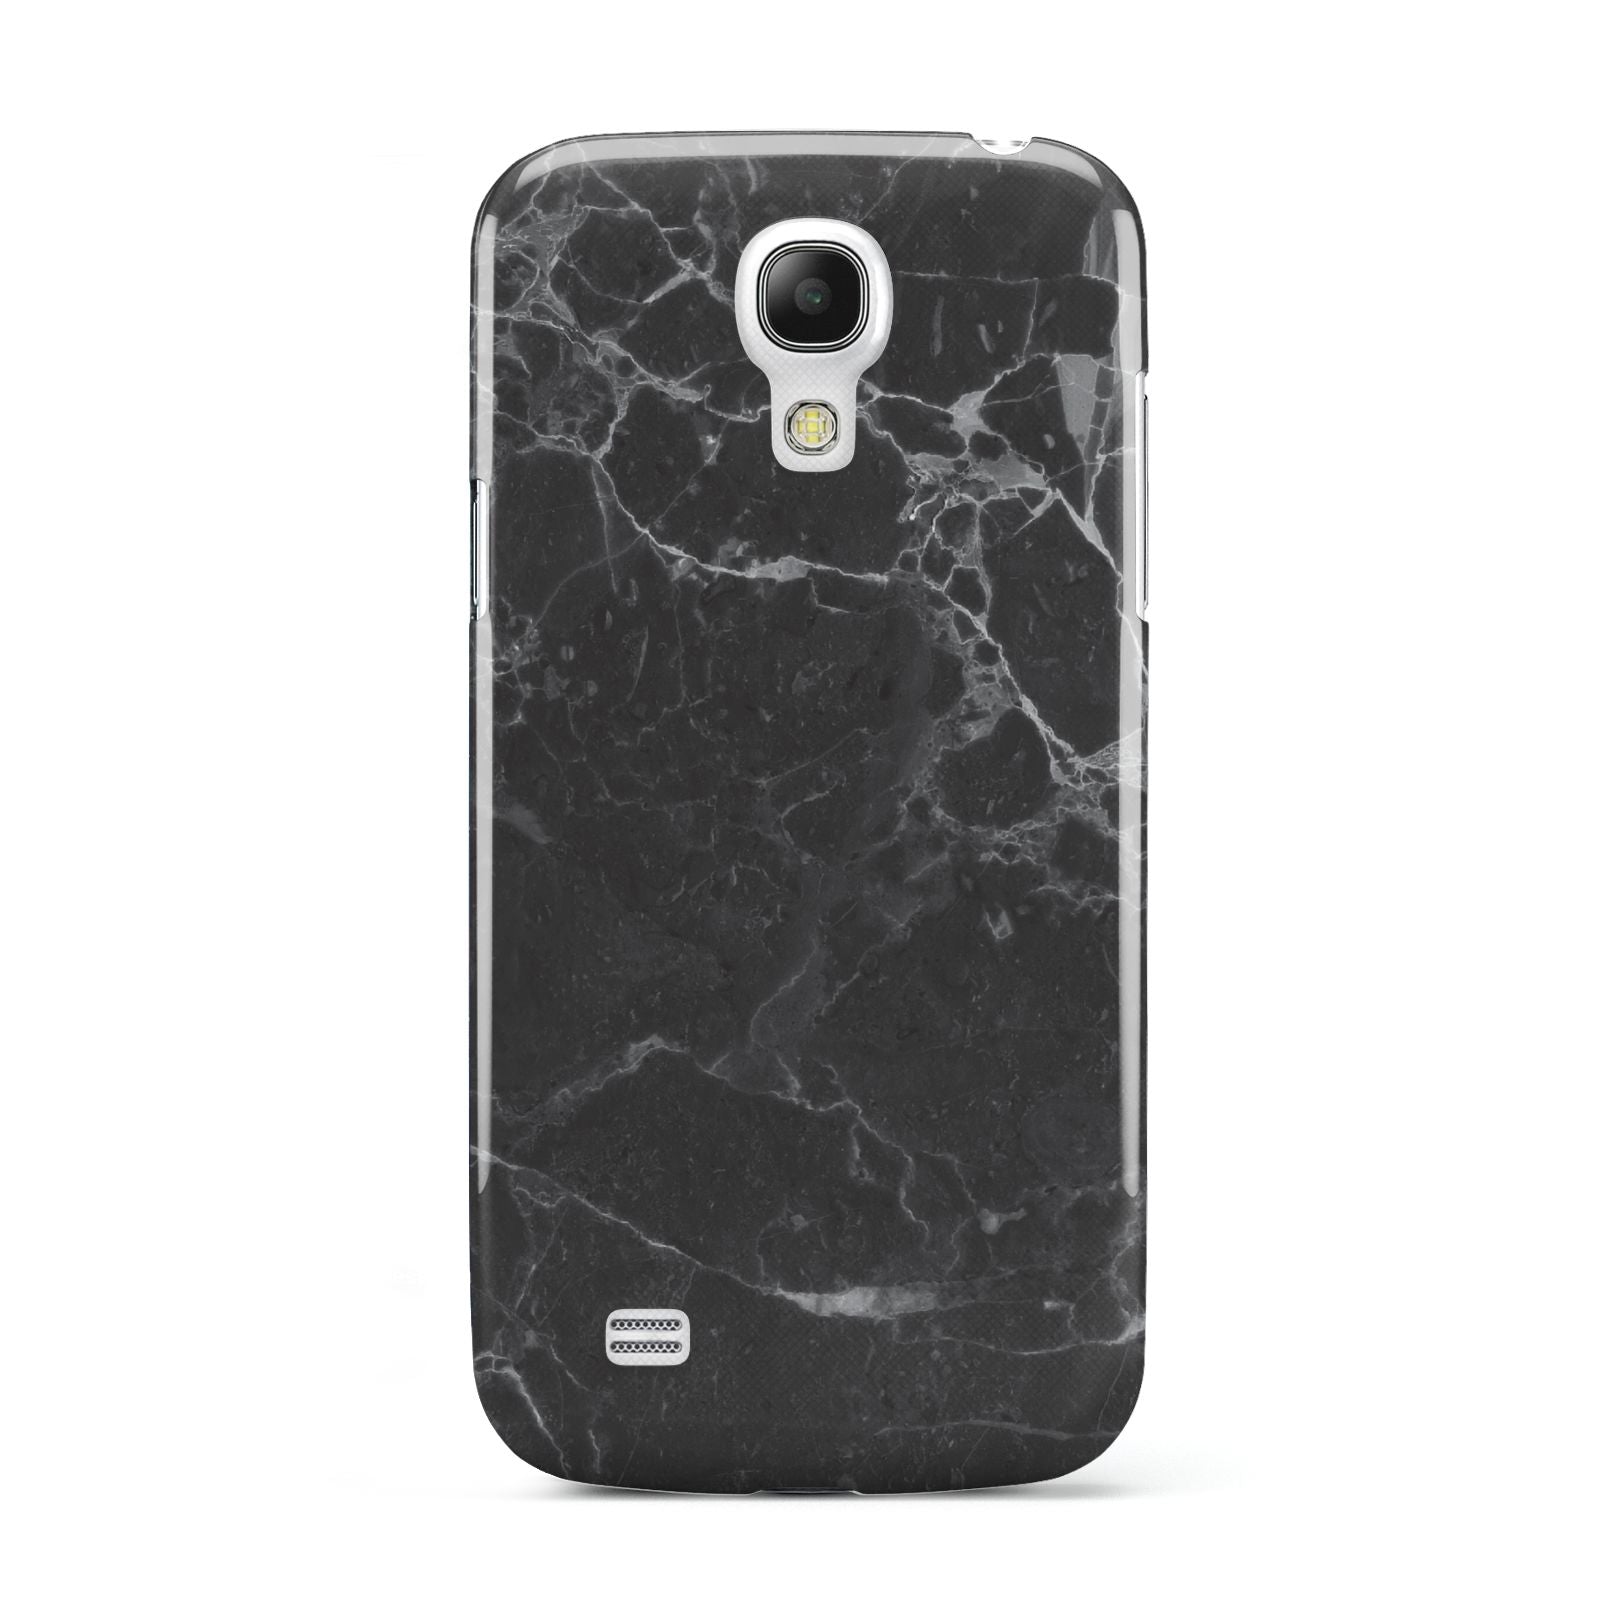 Faux Marble Effect Black Samsung Galaxy S4 Mini Case